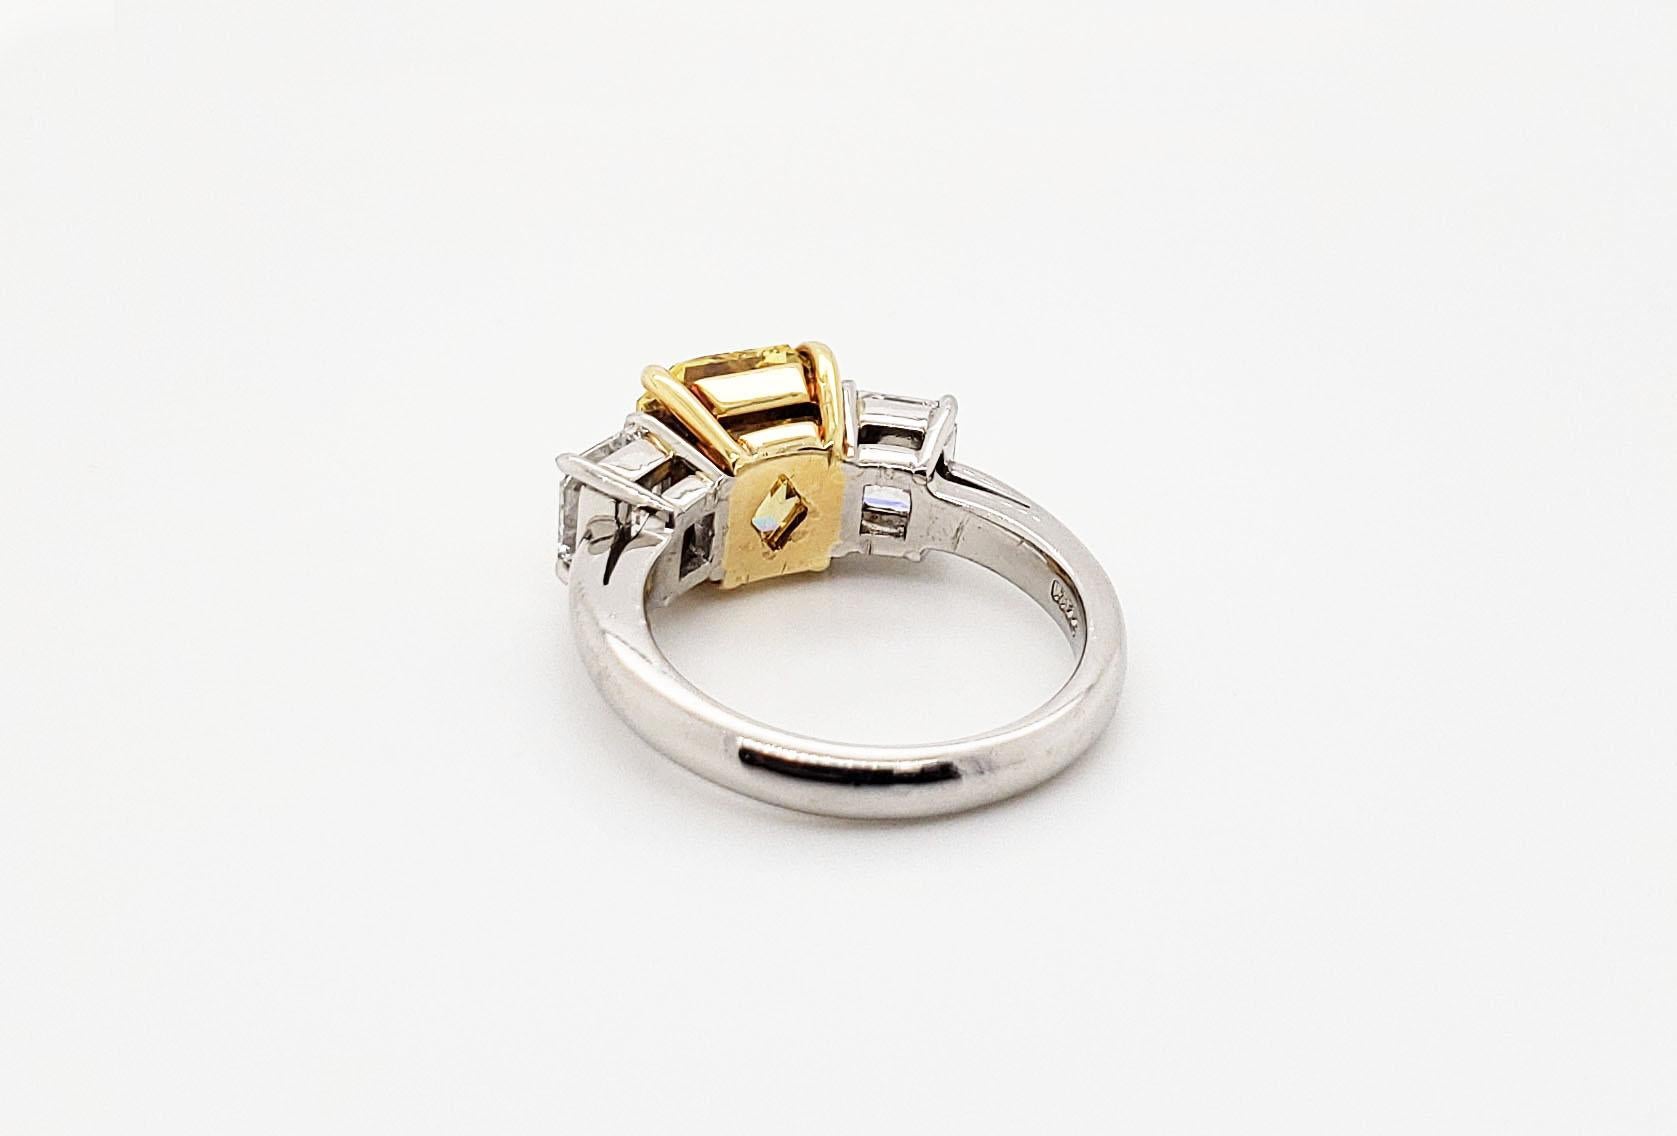 Contemporary Scarselli 4 Carat Fancy Vivid Yellow Asscher Cut Diamond Ring, Platinum GIA